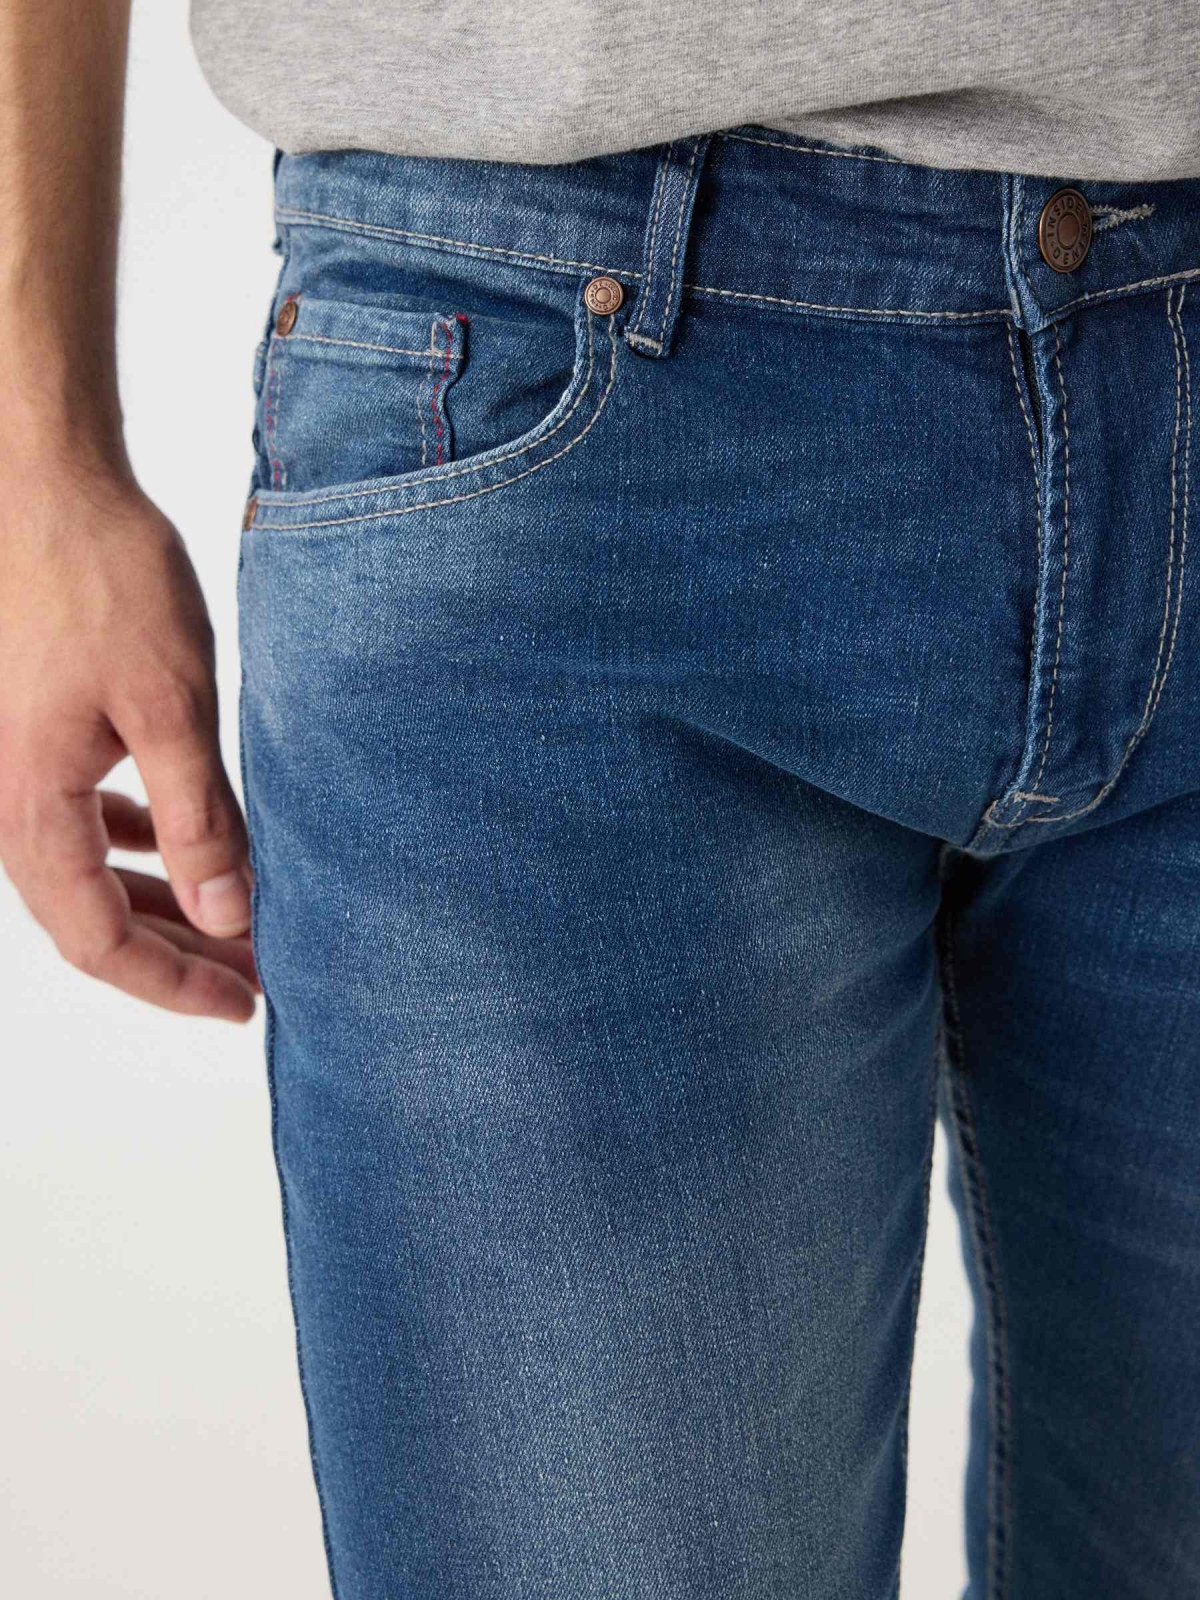 Basic slim jeans blue detail view